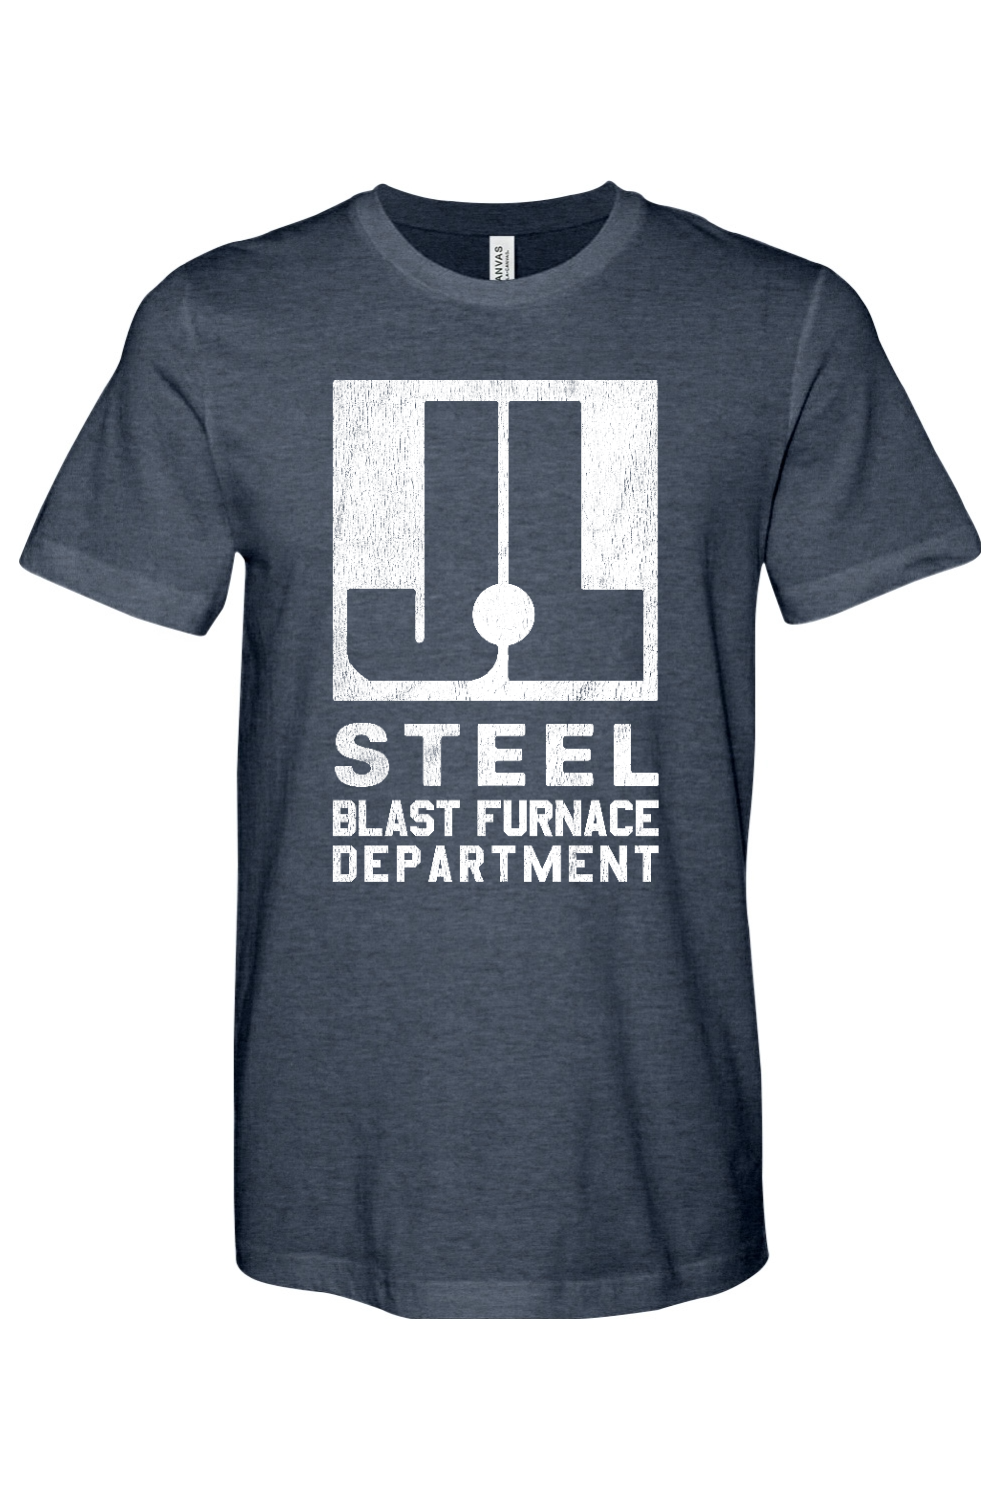 J&L Steel - Blast Furnace Department - Yinzylvania